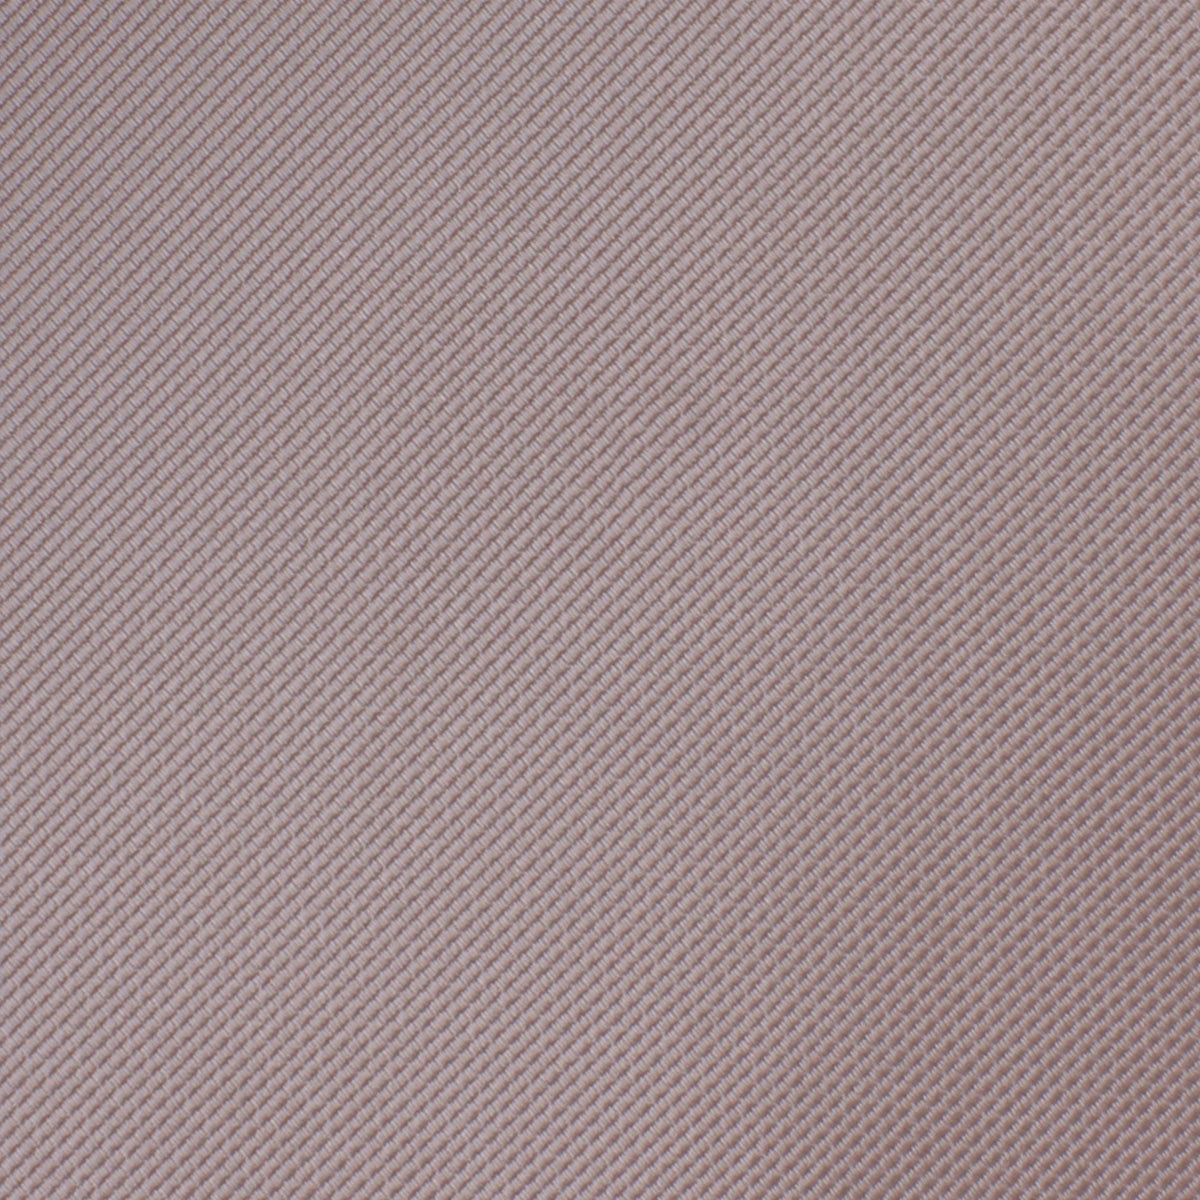 Biscotti Grey Weave Pocket Square Fabric